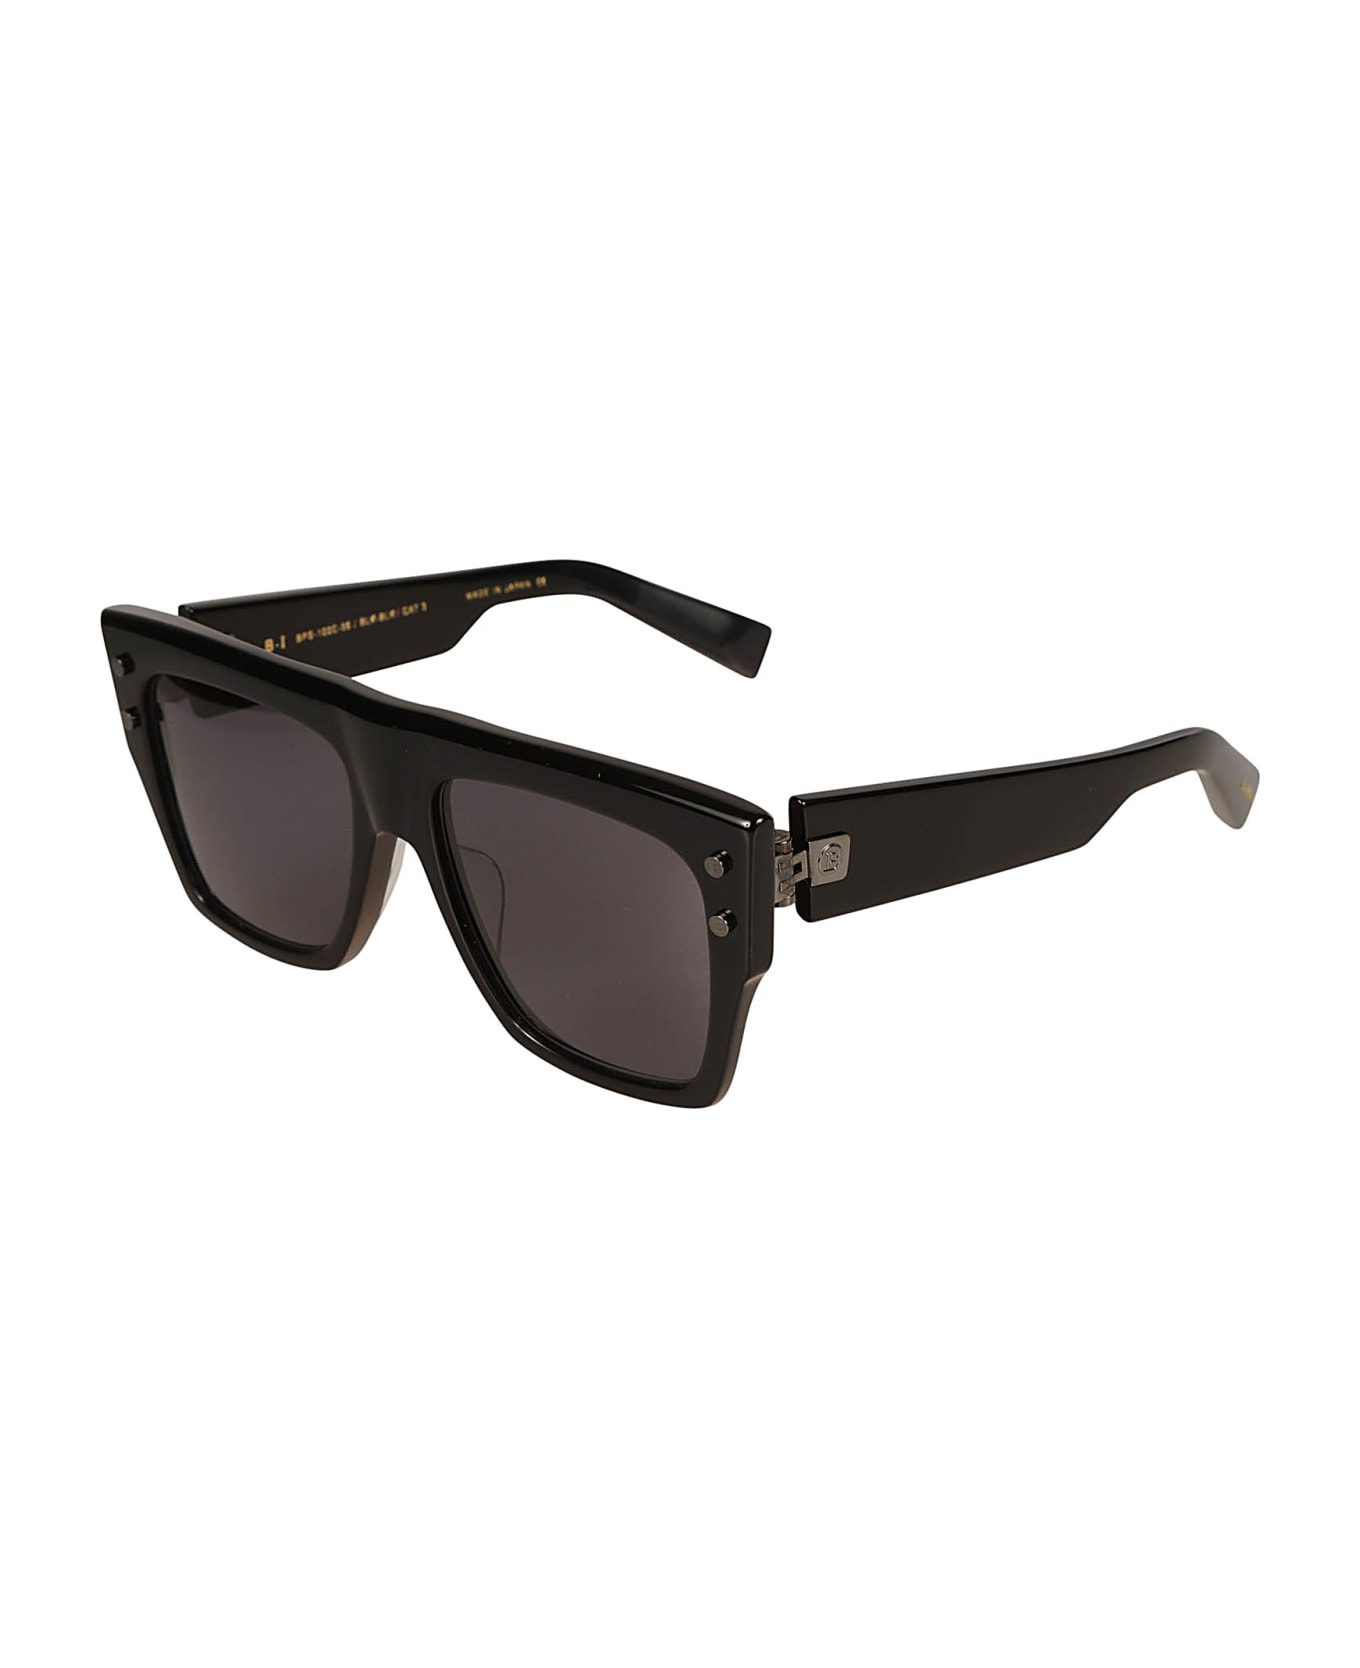 Balmain B-i Sunglasses Sunglasses - Black